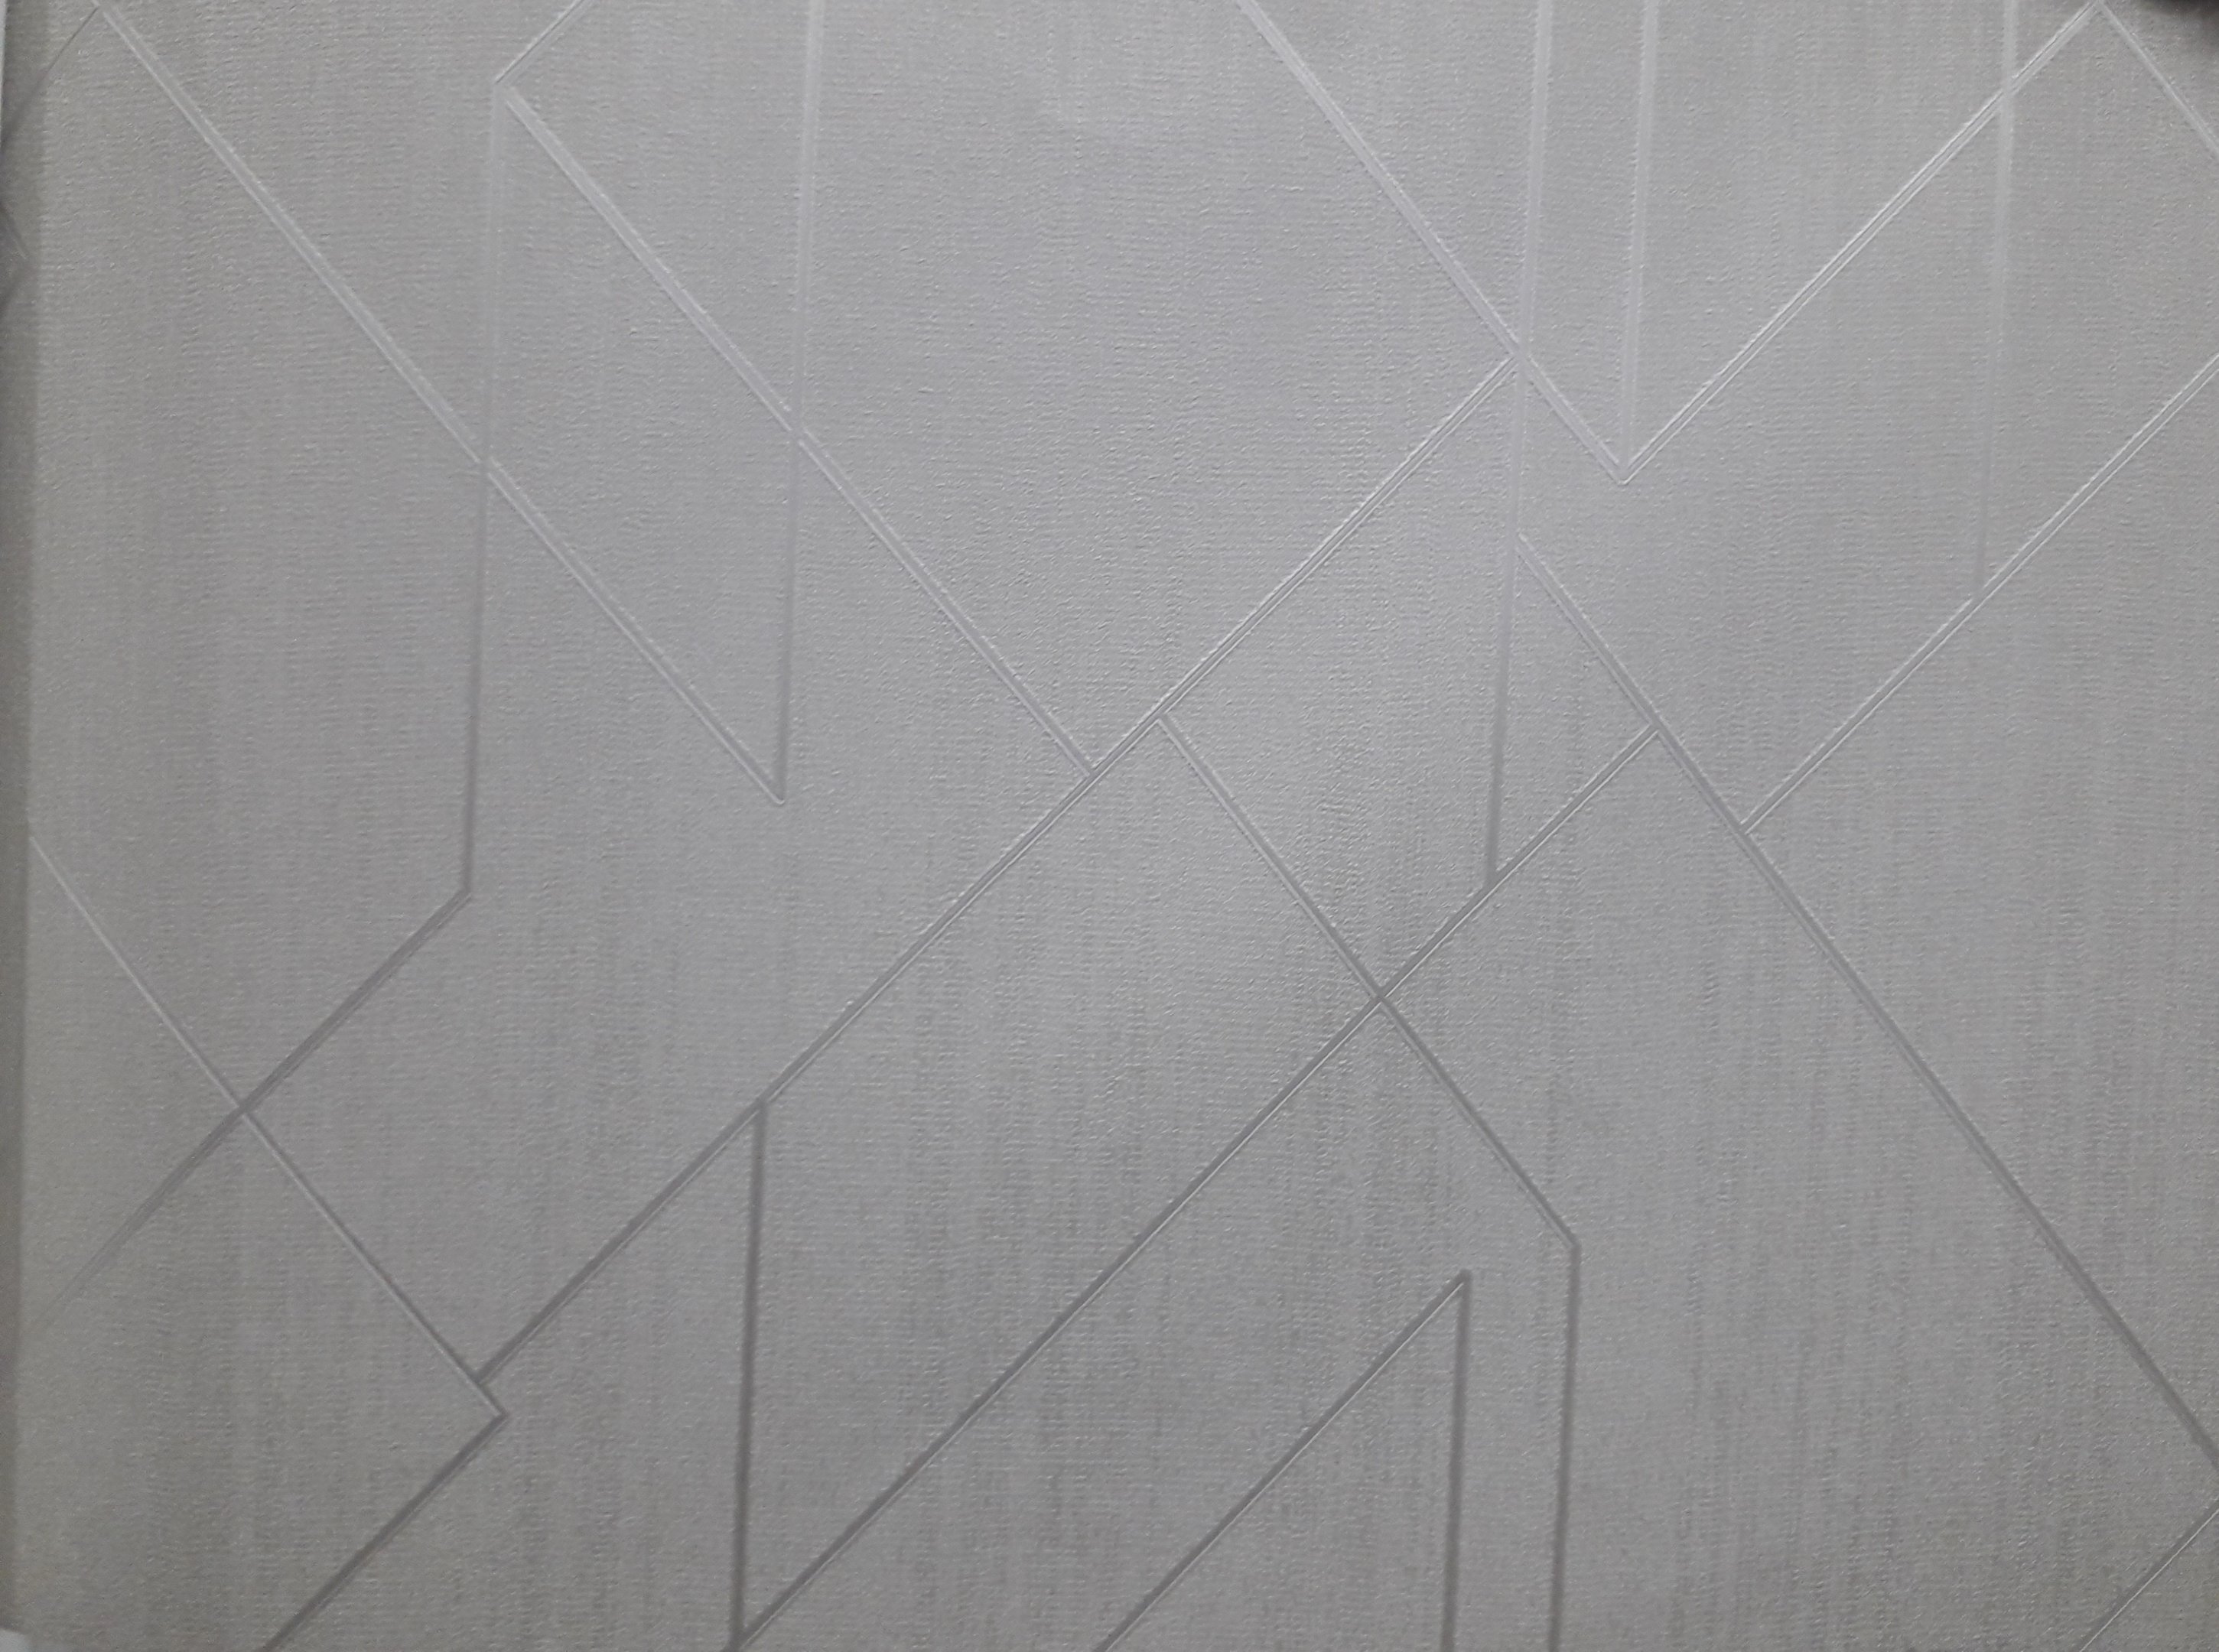 papel de parede vinilico - modelo geometrico cinza claro - vip 1043 - medida 0.53 x 10.0 metros - 1